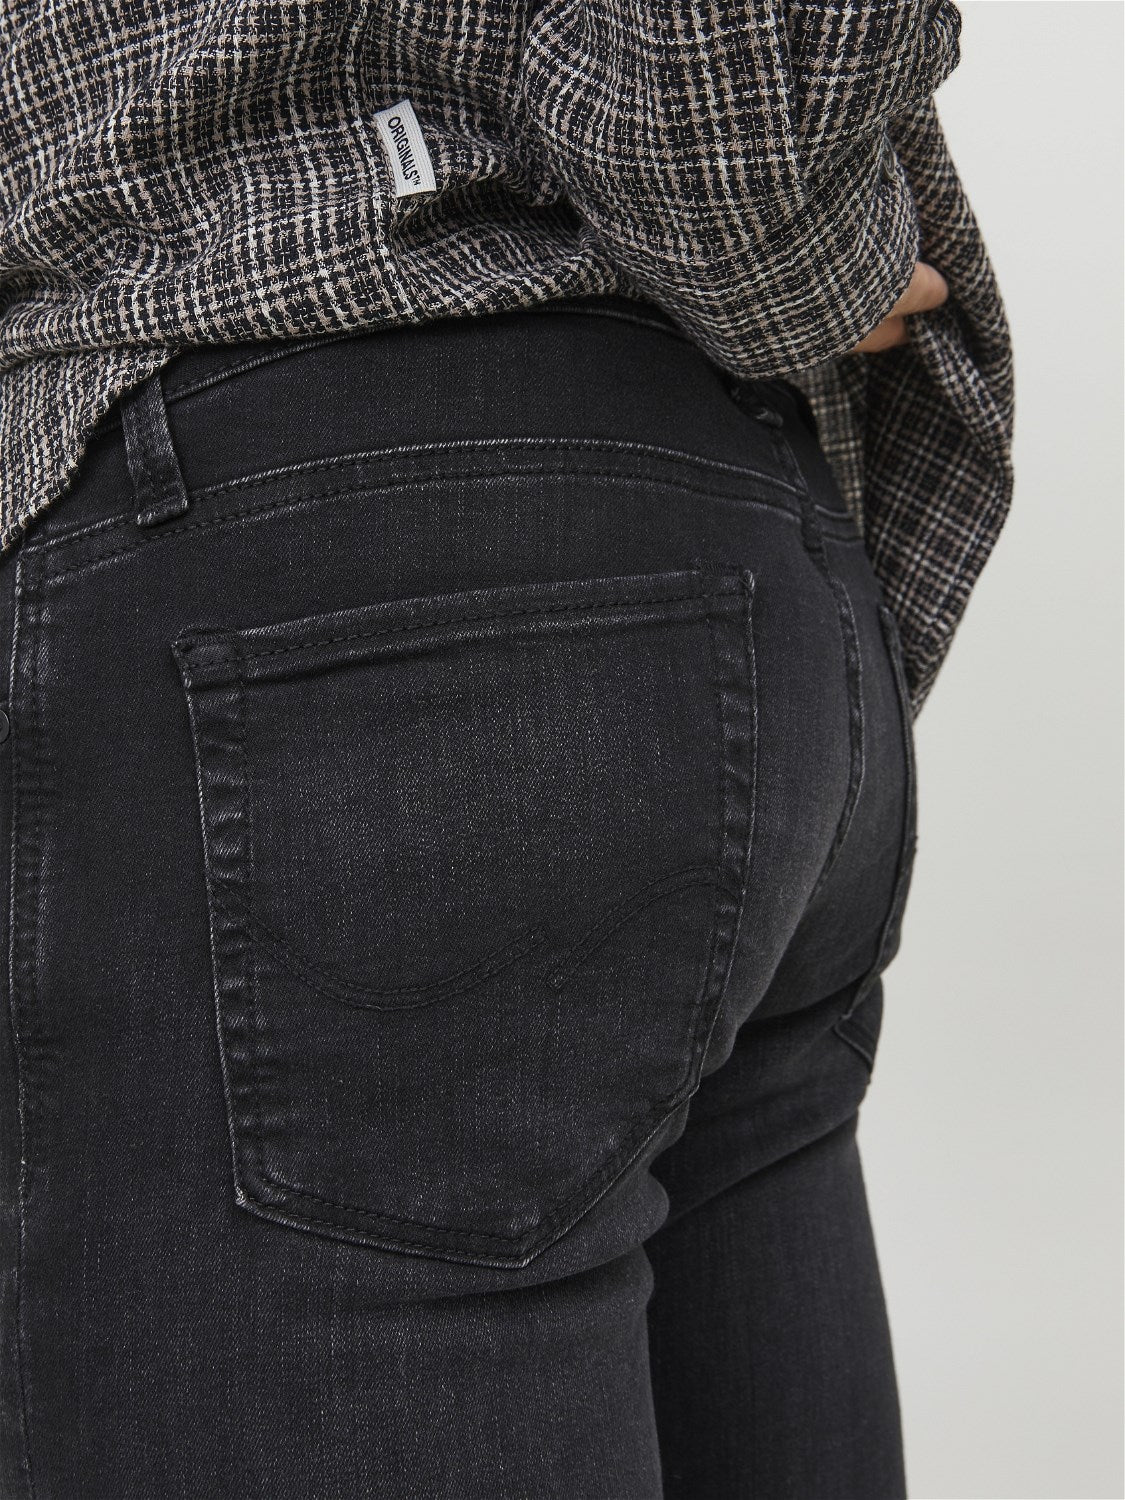 Glenn Icon  557 Slim Black Washed Jeans-Back pocket view